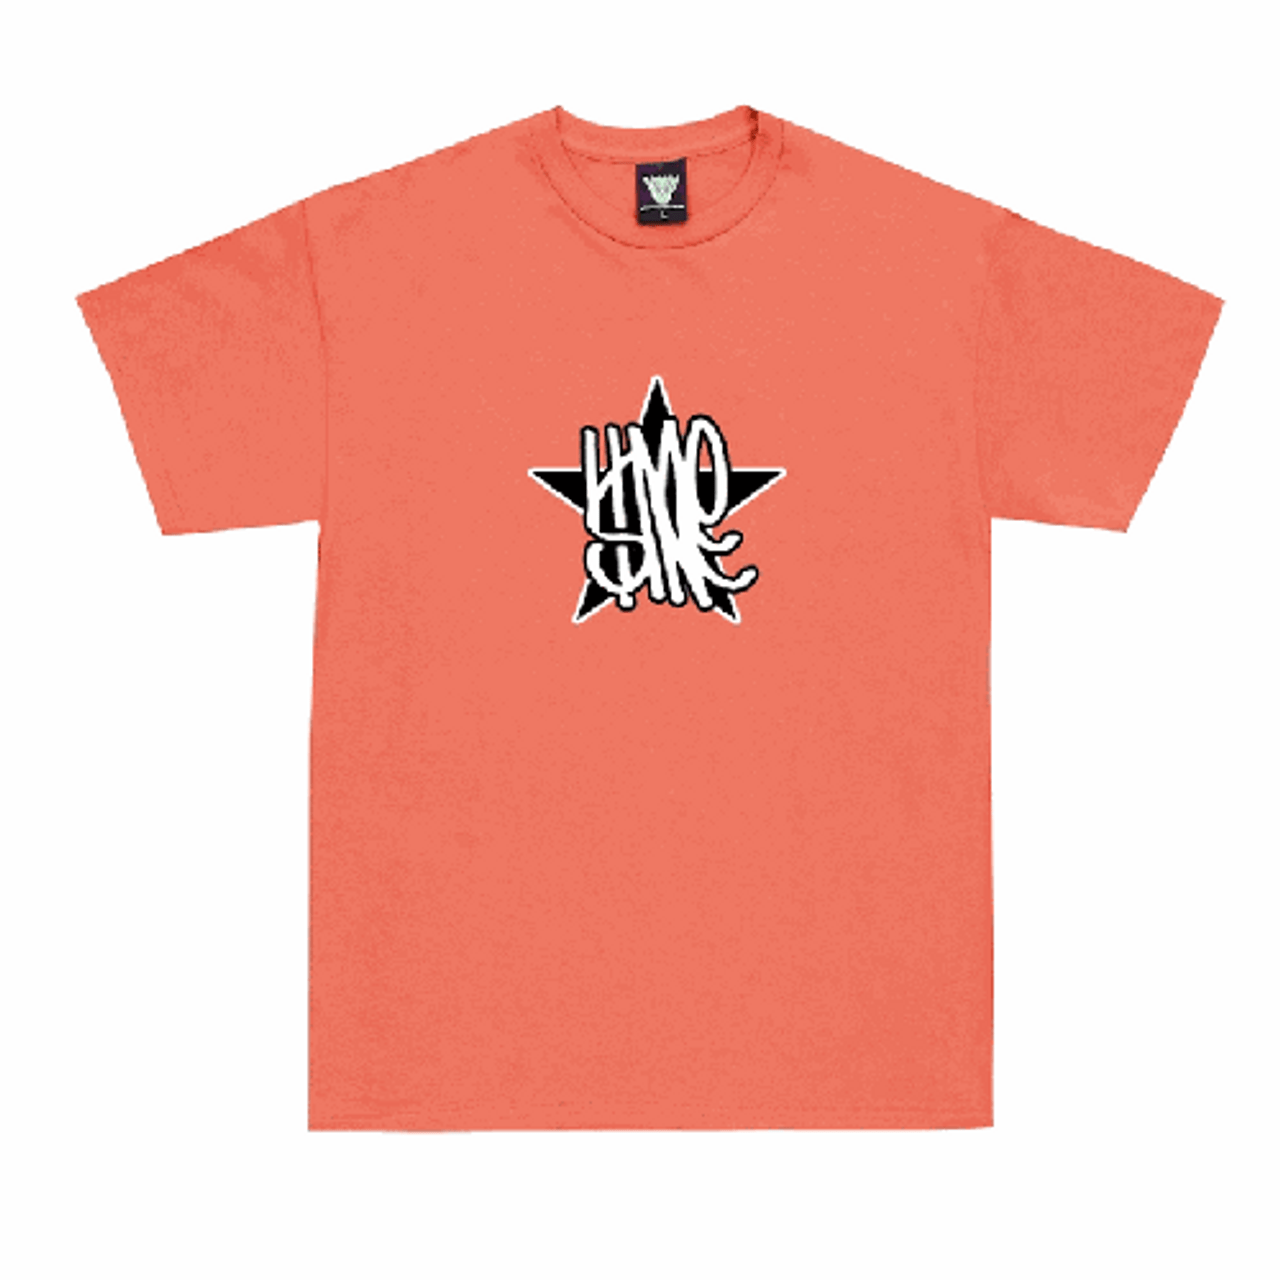 Limosine Star Orange Coral Tshirt MD